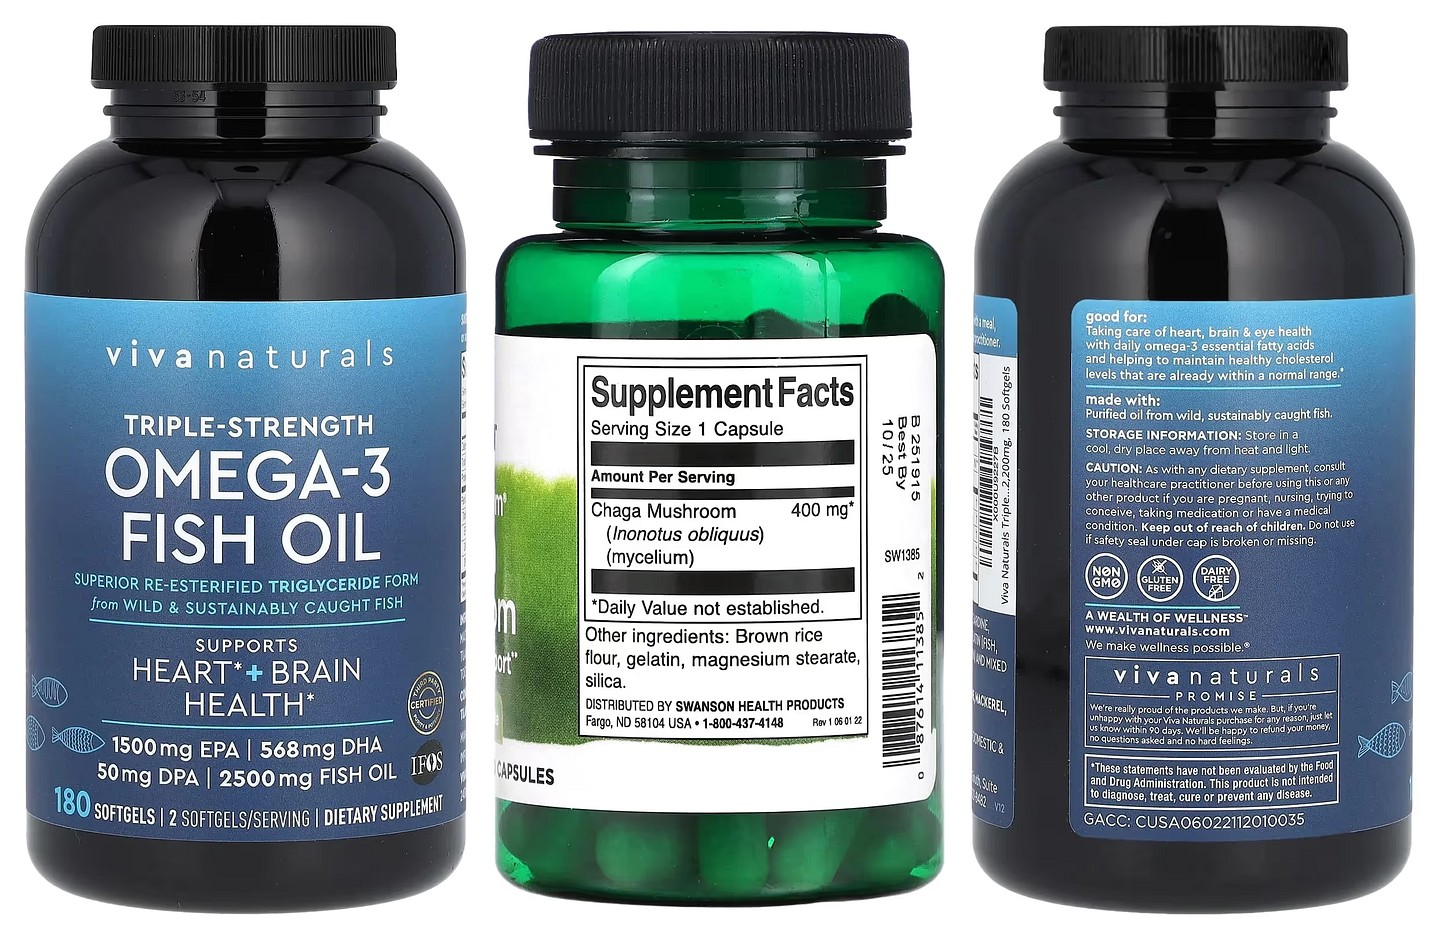 Viva Naturals, Omega-3 Fish Oil packaging